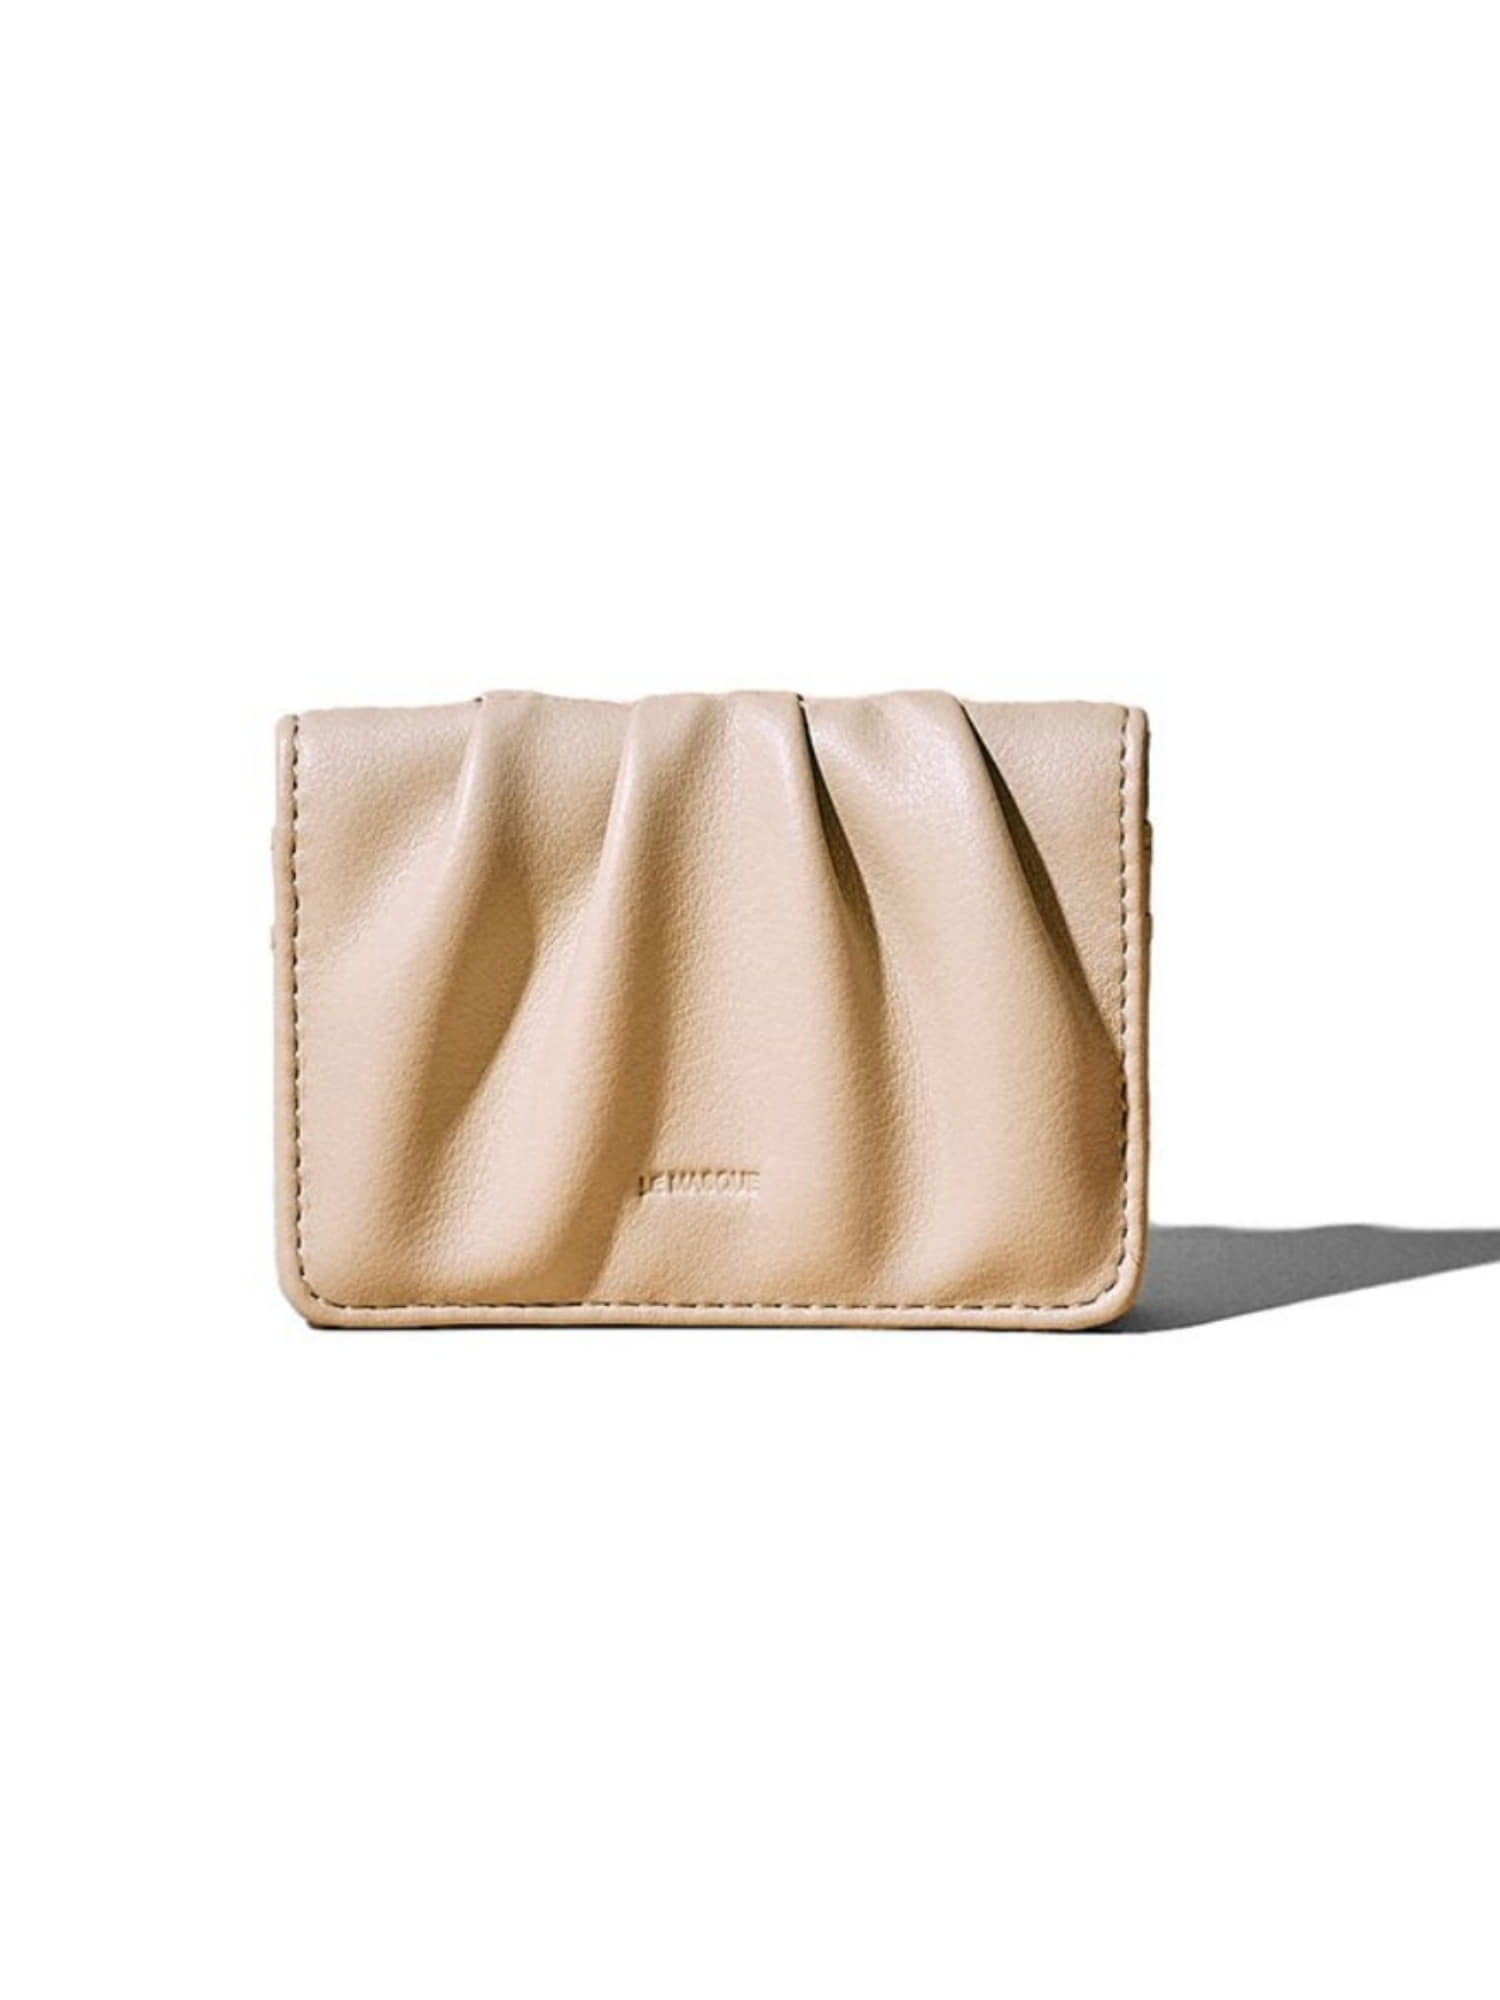 DOUGH Soft Leather Card Case Wallet - Beige